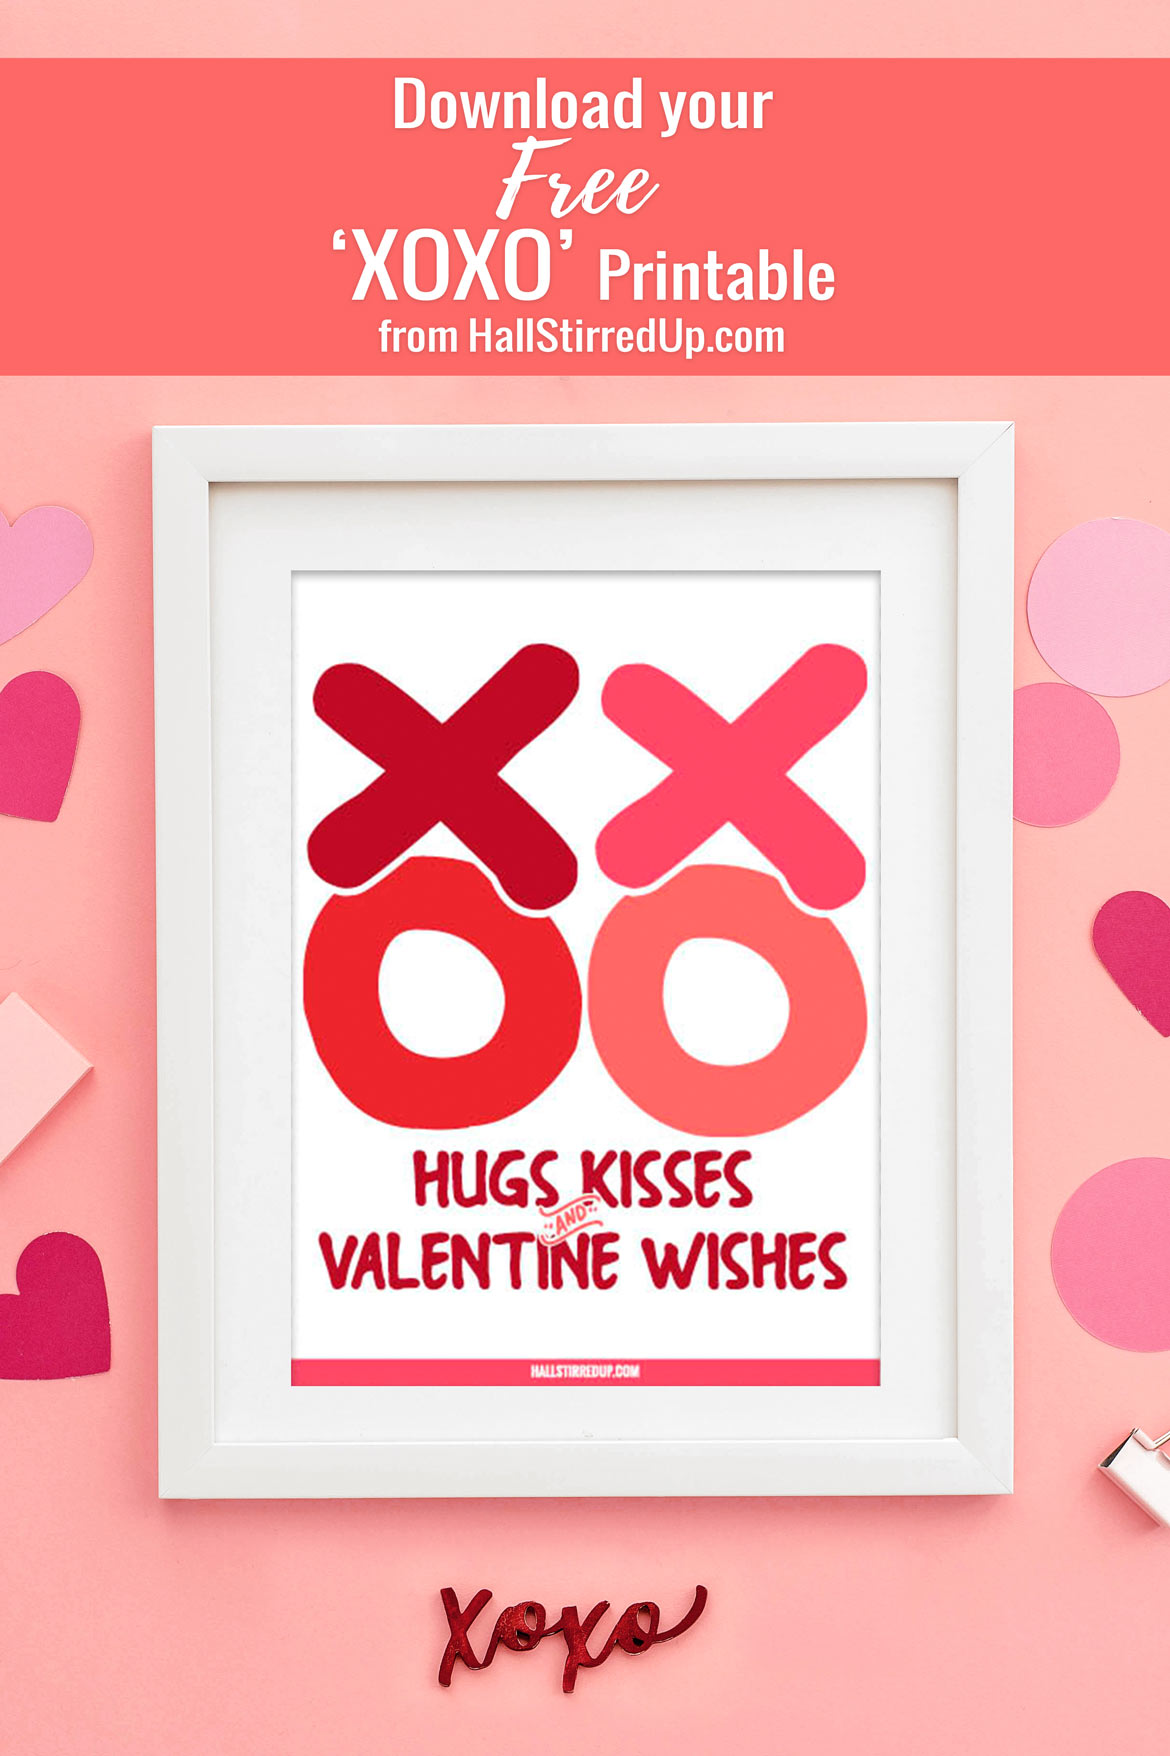 XOXO It's a fun Hugs and Kisses Valentine printable